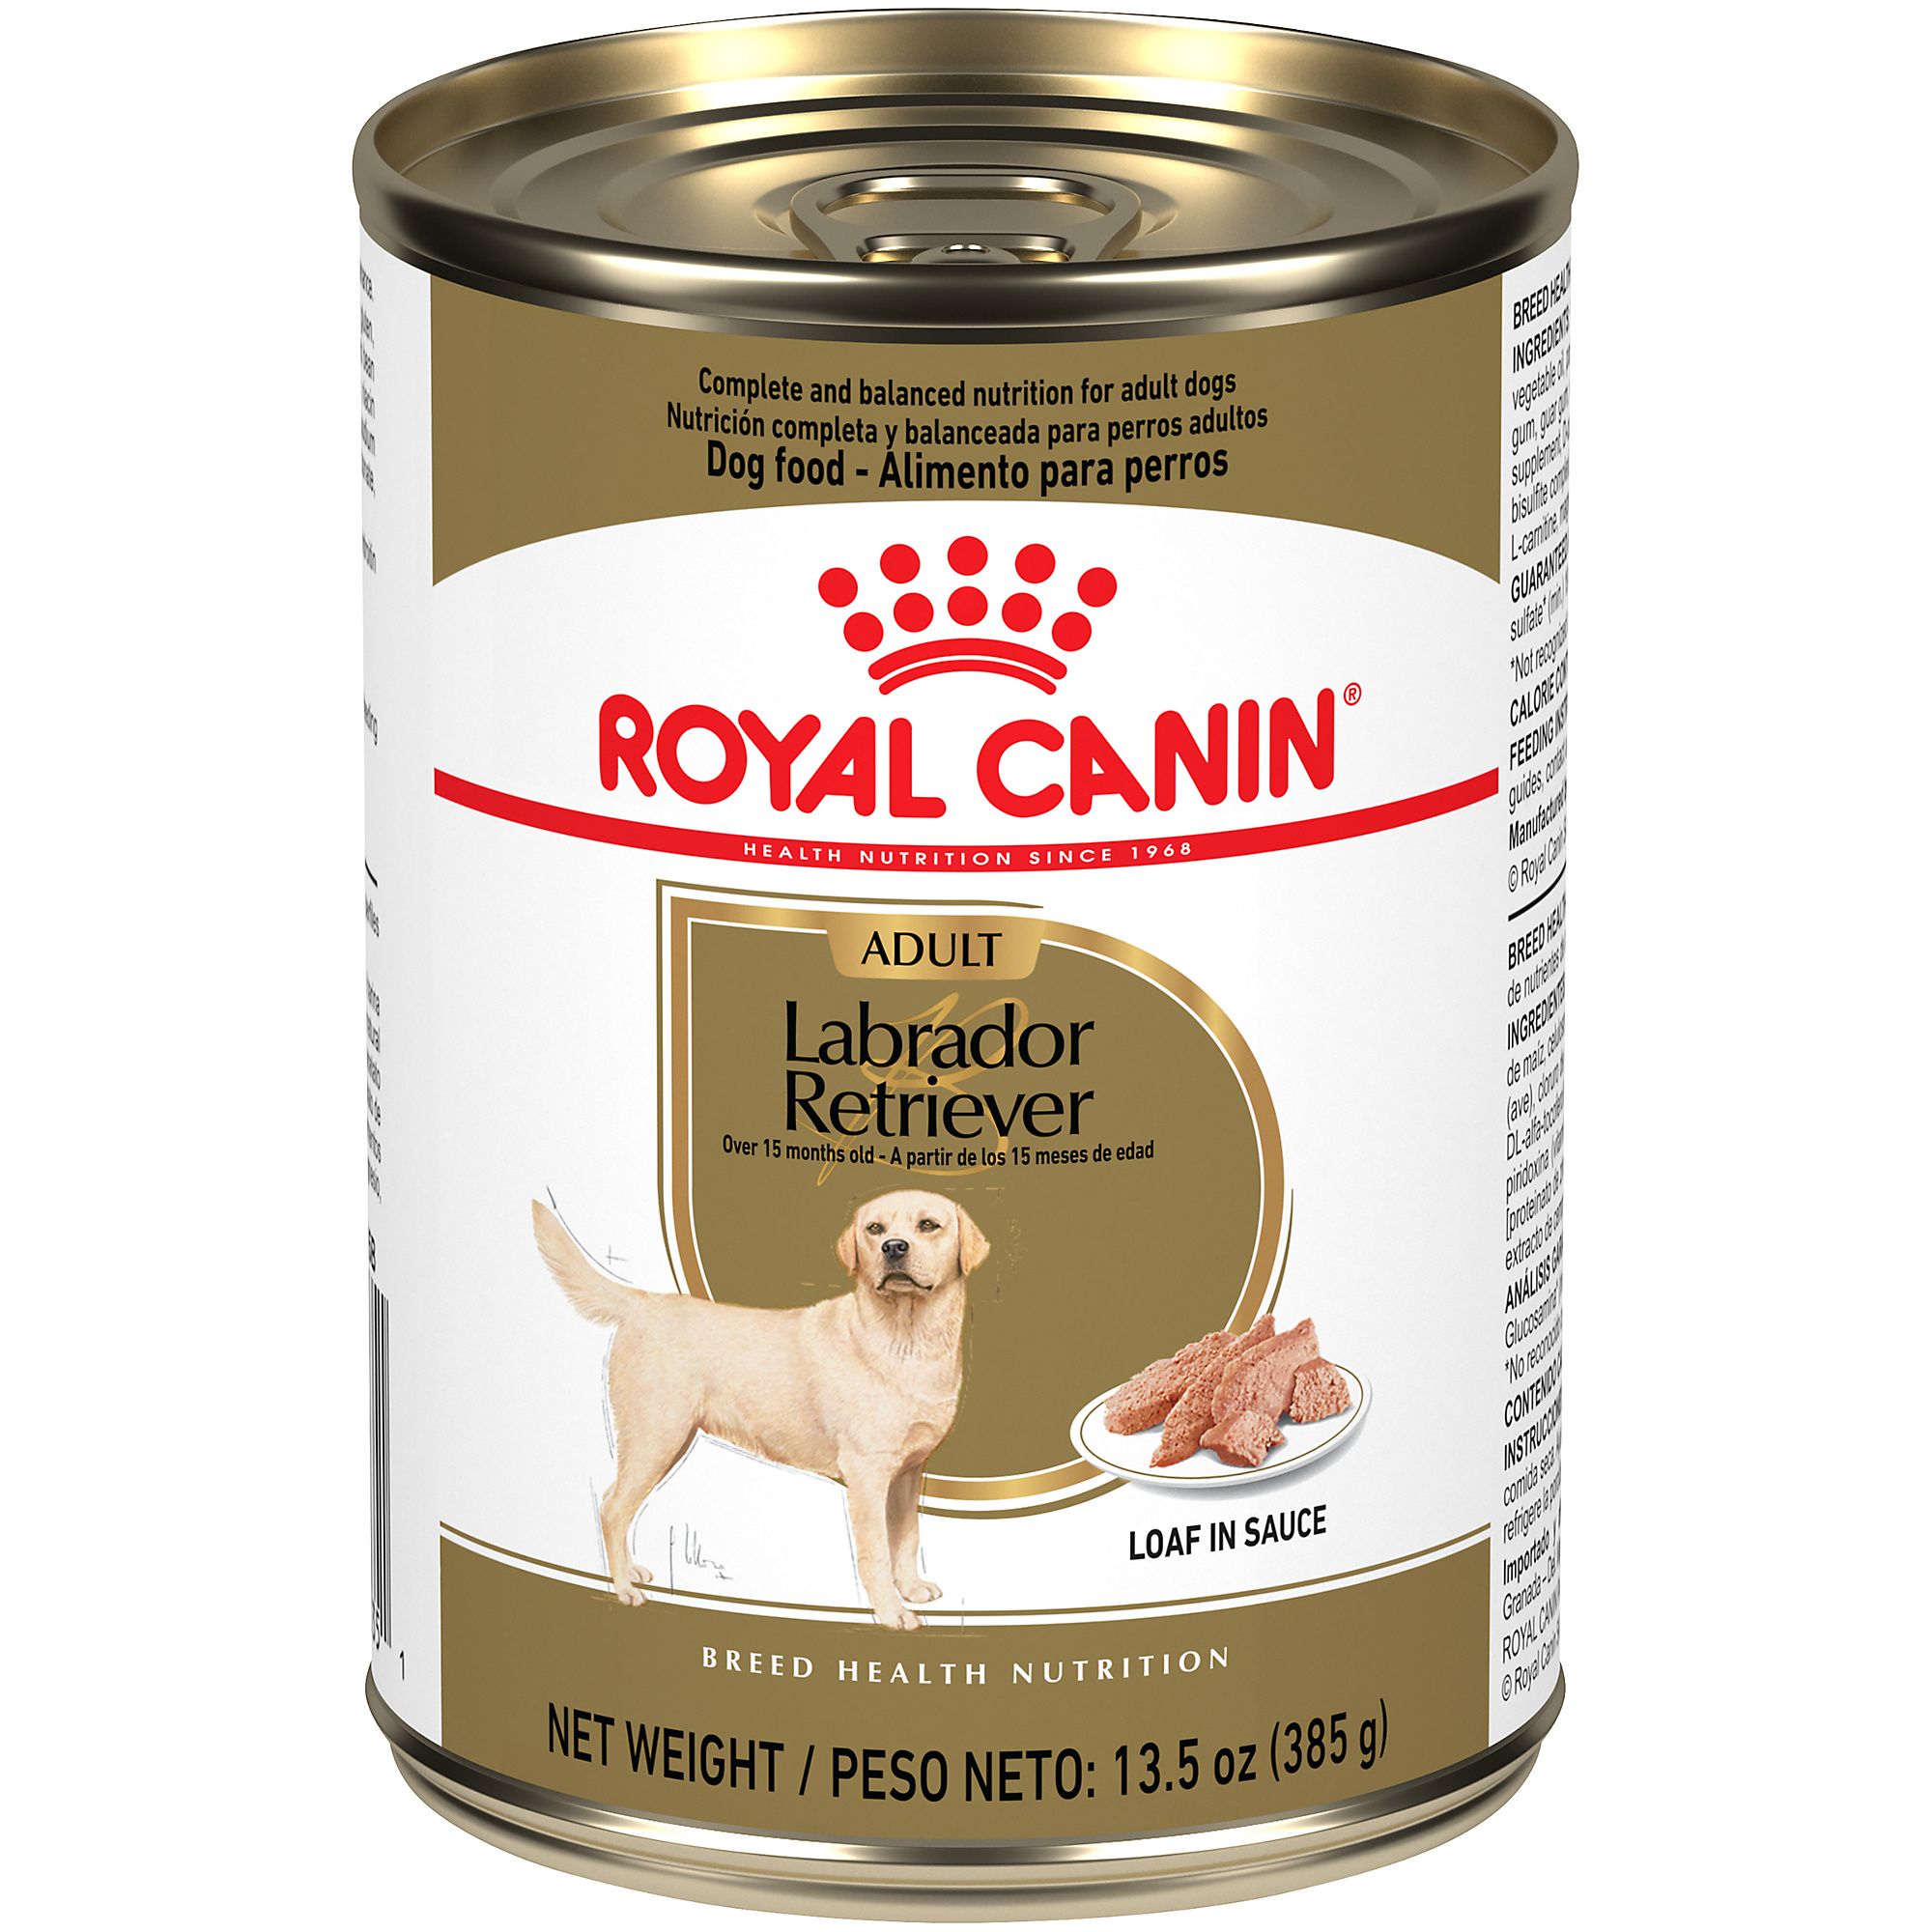 Royal Canin Labrador Retriever wet dog food is designed to meet the ...